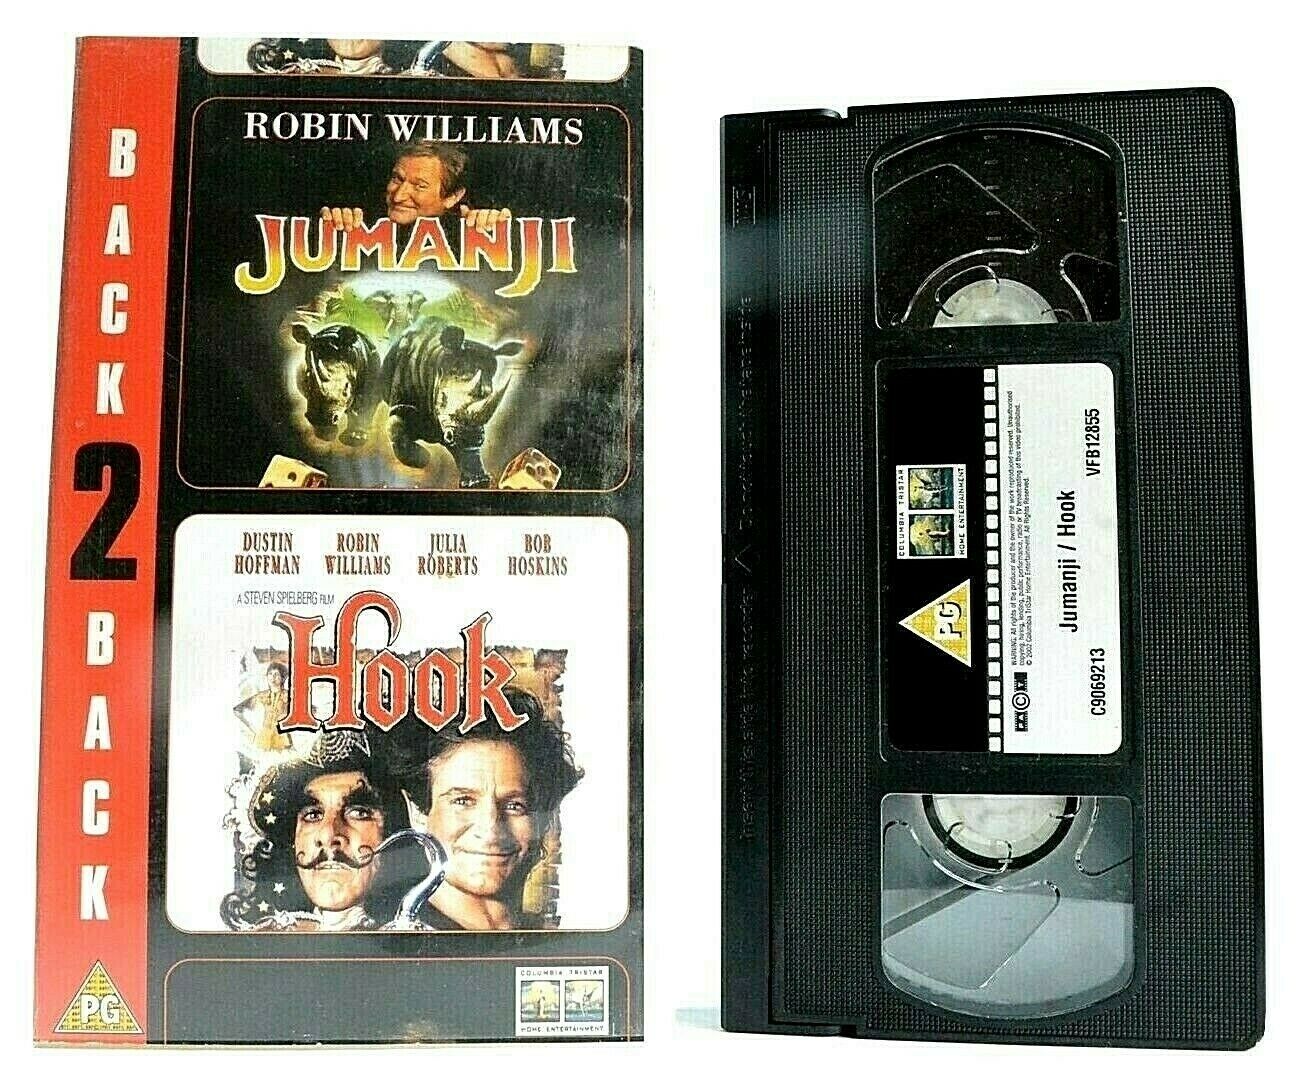 Jumanji 1995 / Hook 1991; Double Feature, Robin Williams, Kids